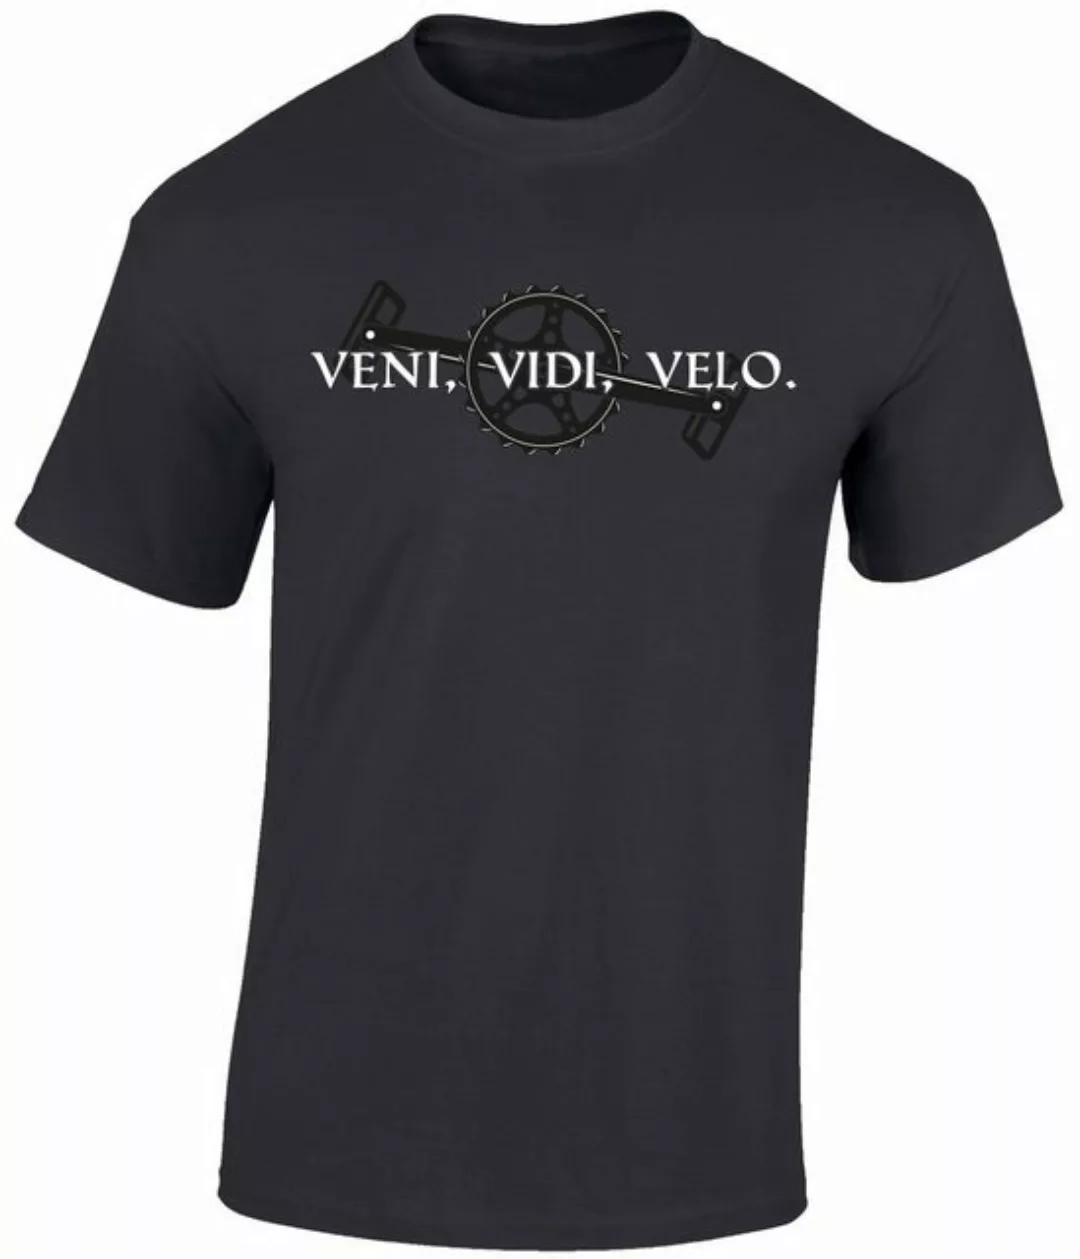 Baddery Print-Shirt Fahrrad T-Shirt : "Veni Vidi Velo" - Latein Fun Shirt, günstig online kaufen